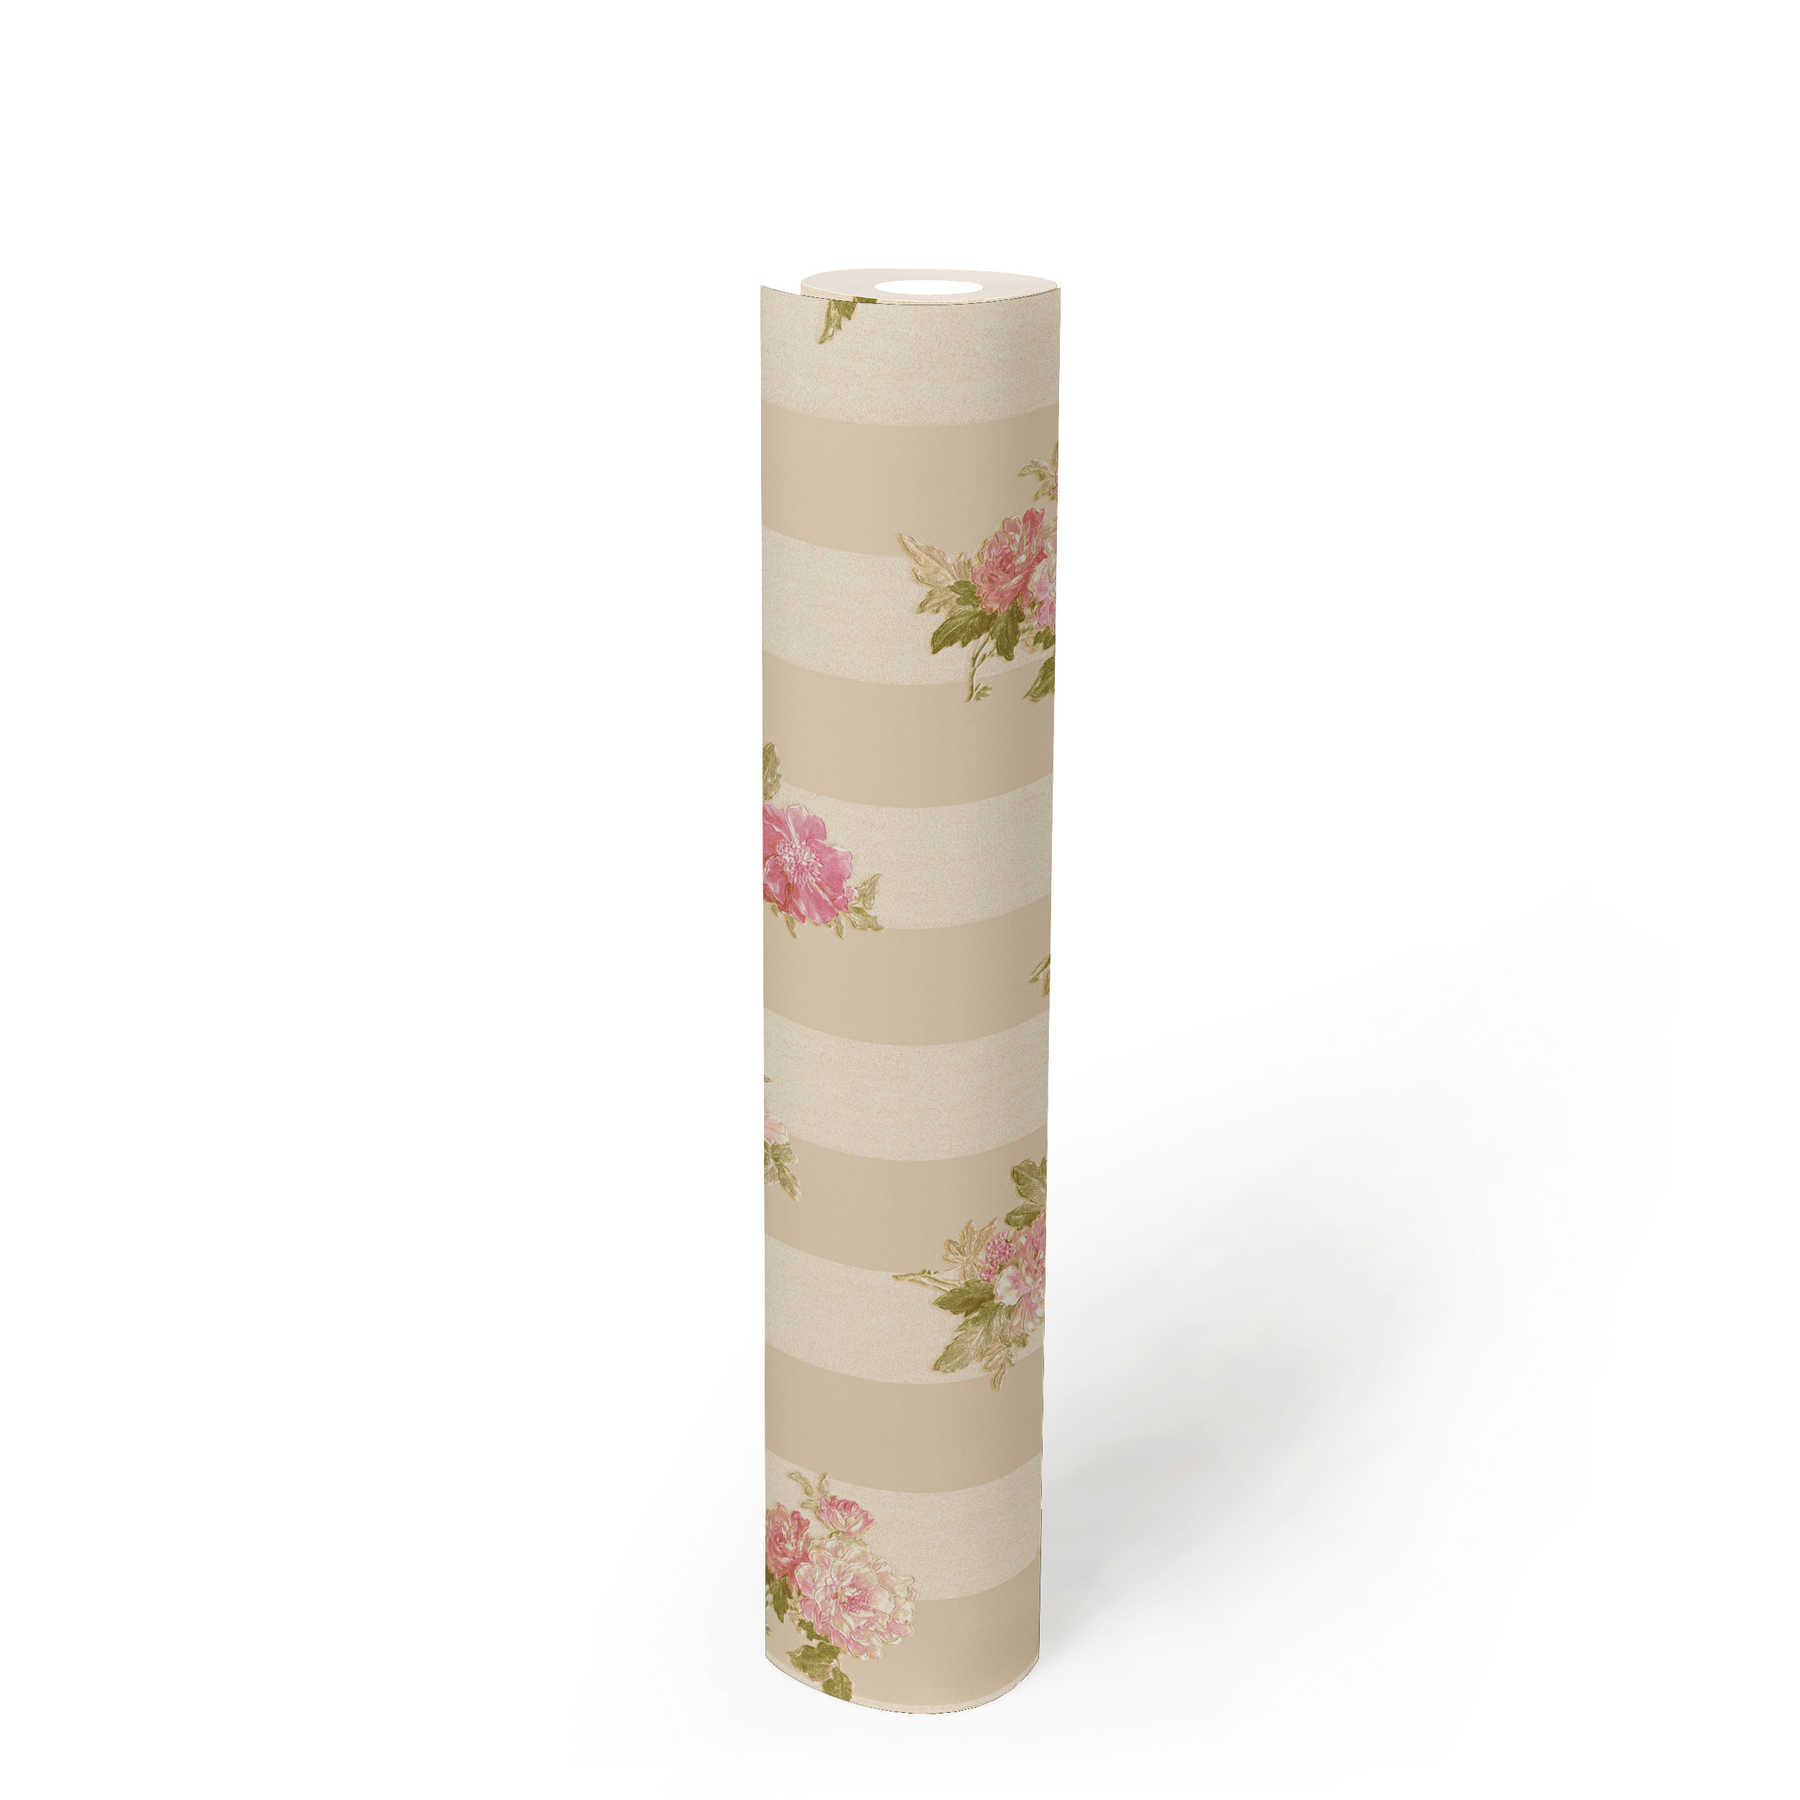             Non-woven wallpaper rose pattern & stripe design - cream, green, pink
        